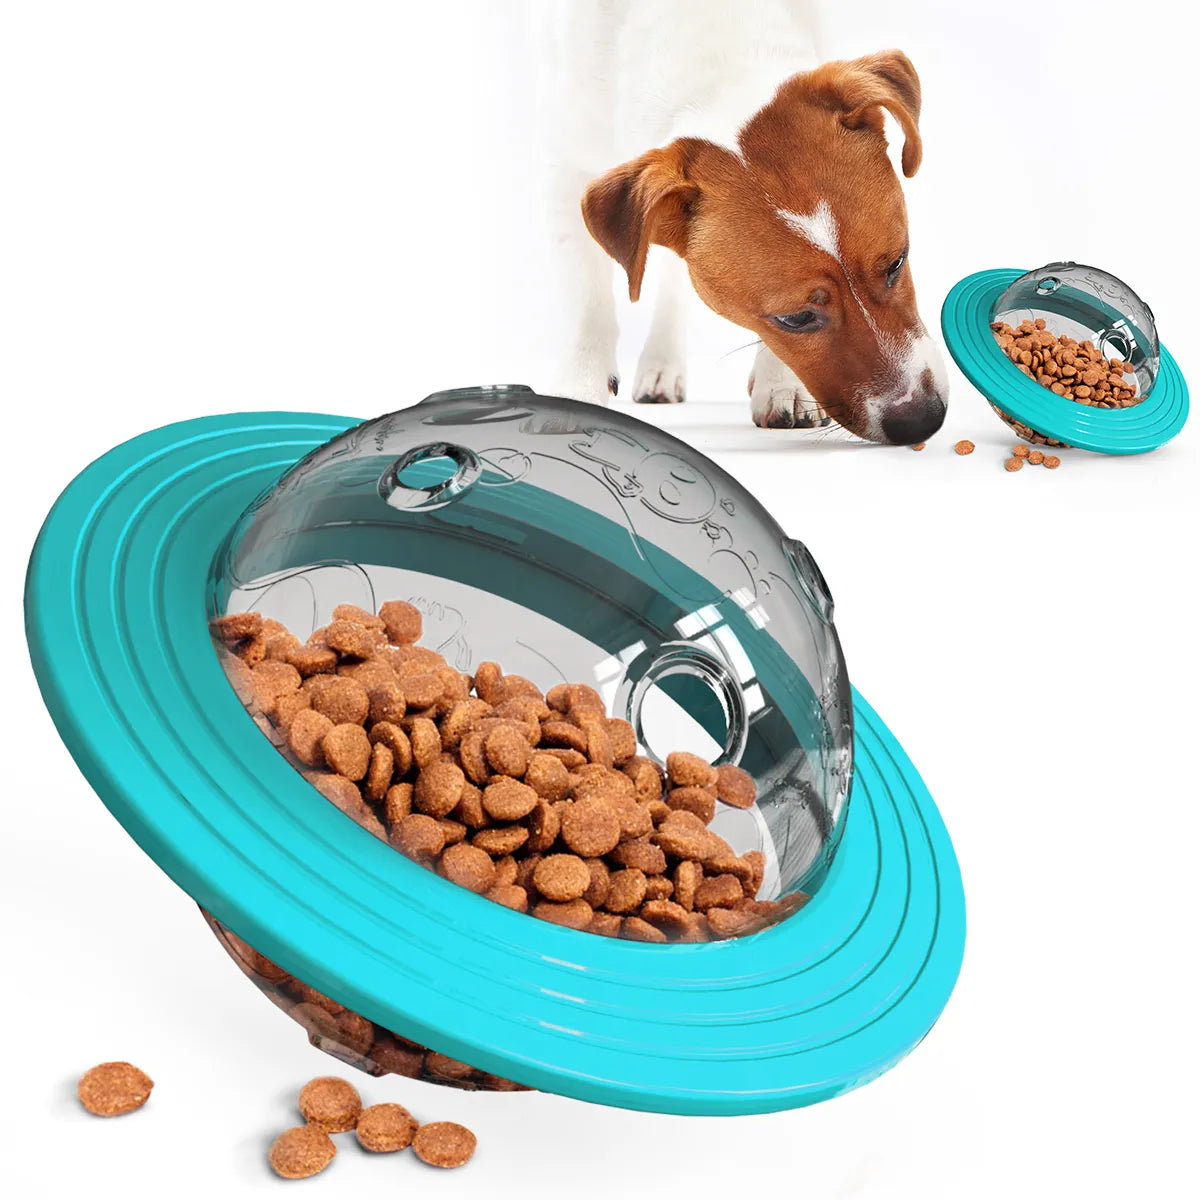 Planet Pup IQ Treat Toy: Interactive Food Dispensing & Training Fun  ourlum.com   